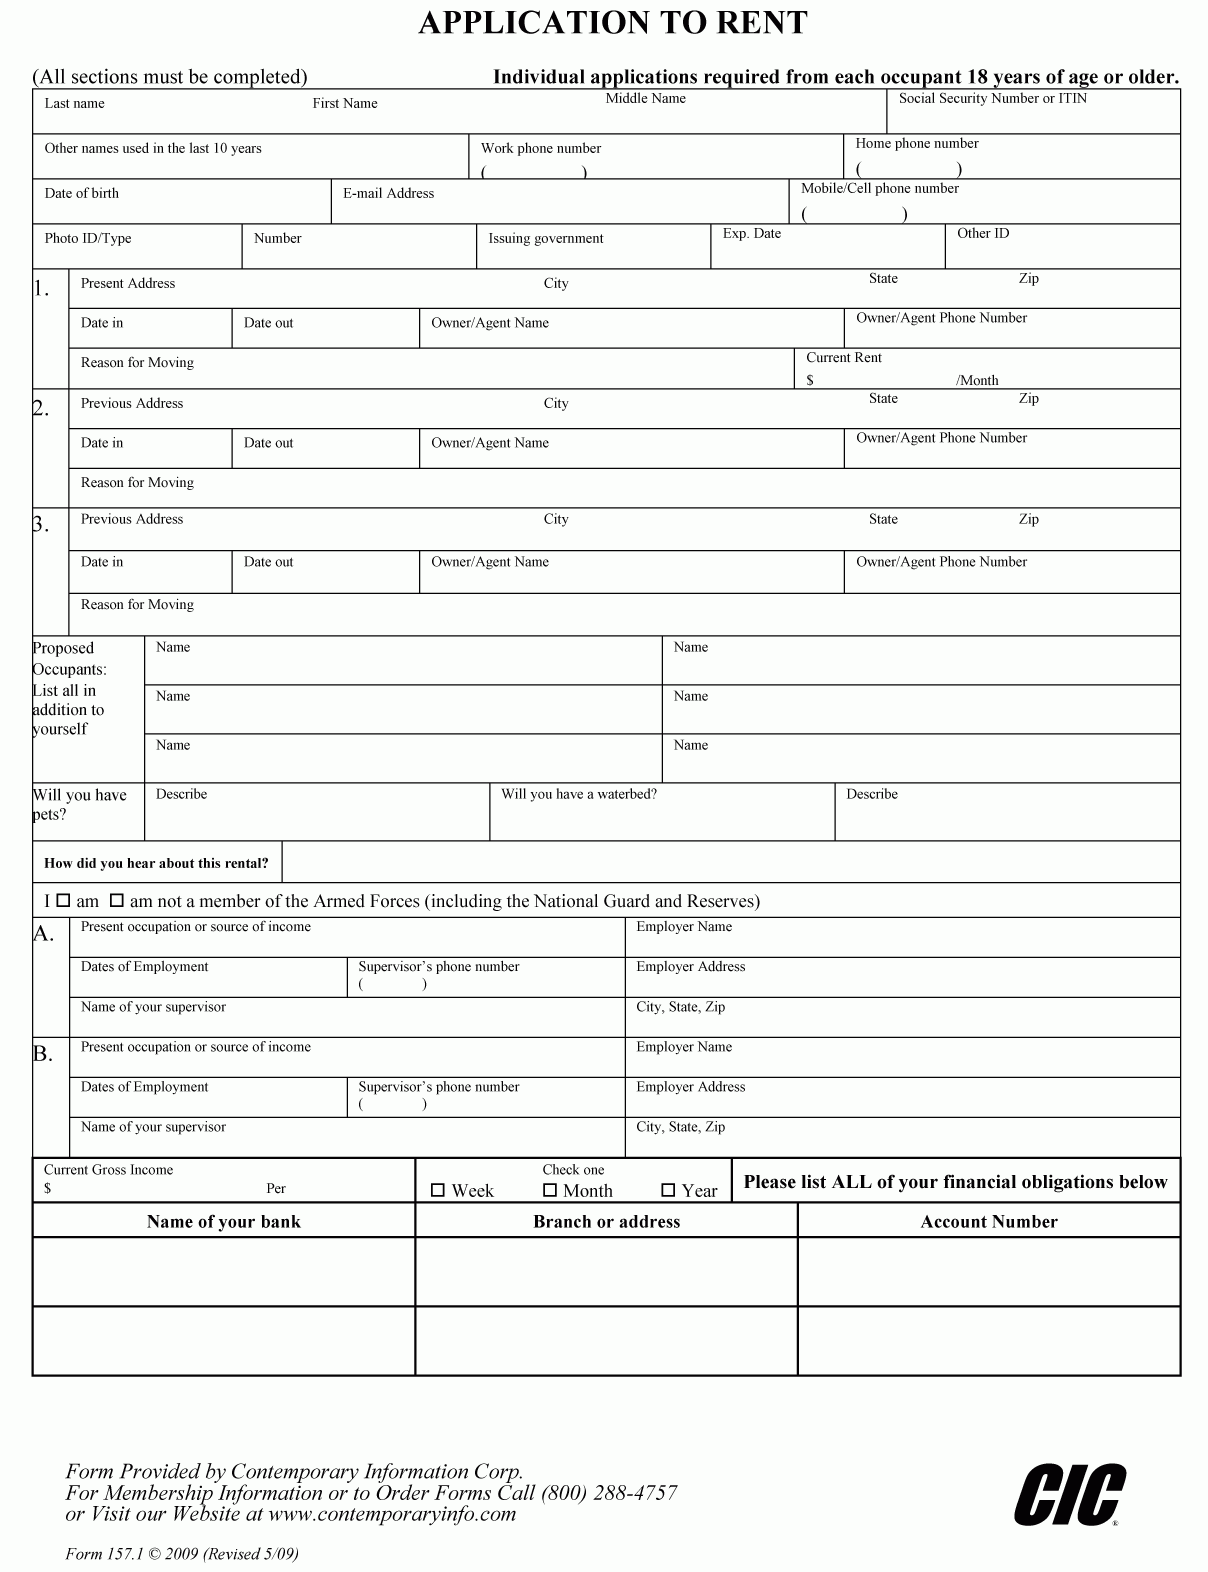 free-rental-application-form-in-spanish-2022-rentalapplicationform